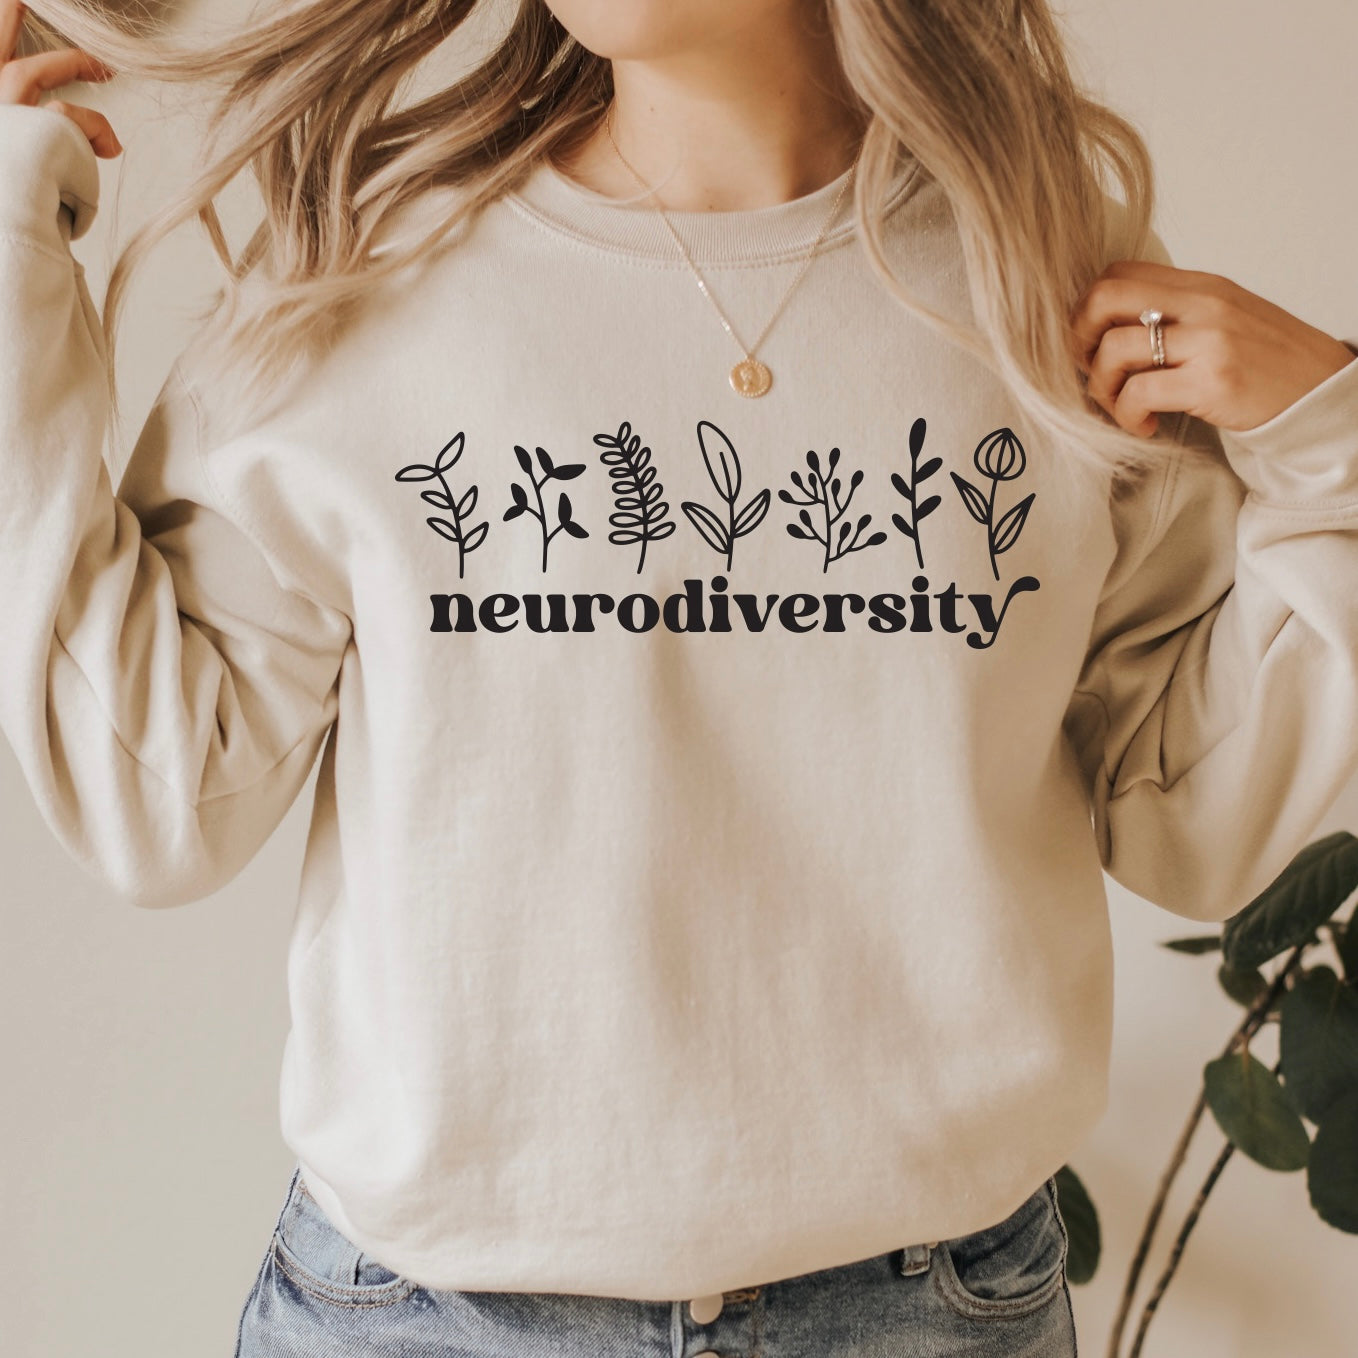 Neurodiversity • Sand Pullover